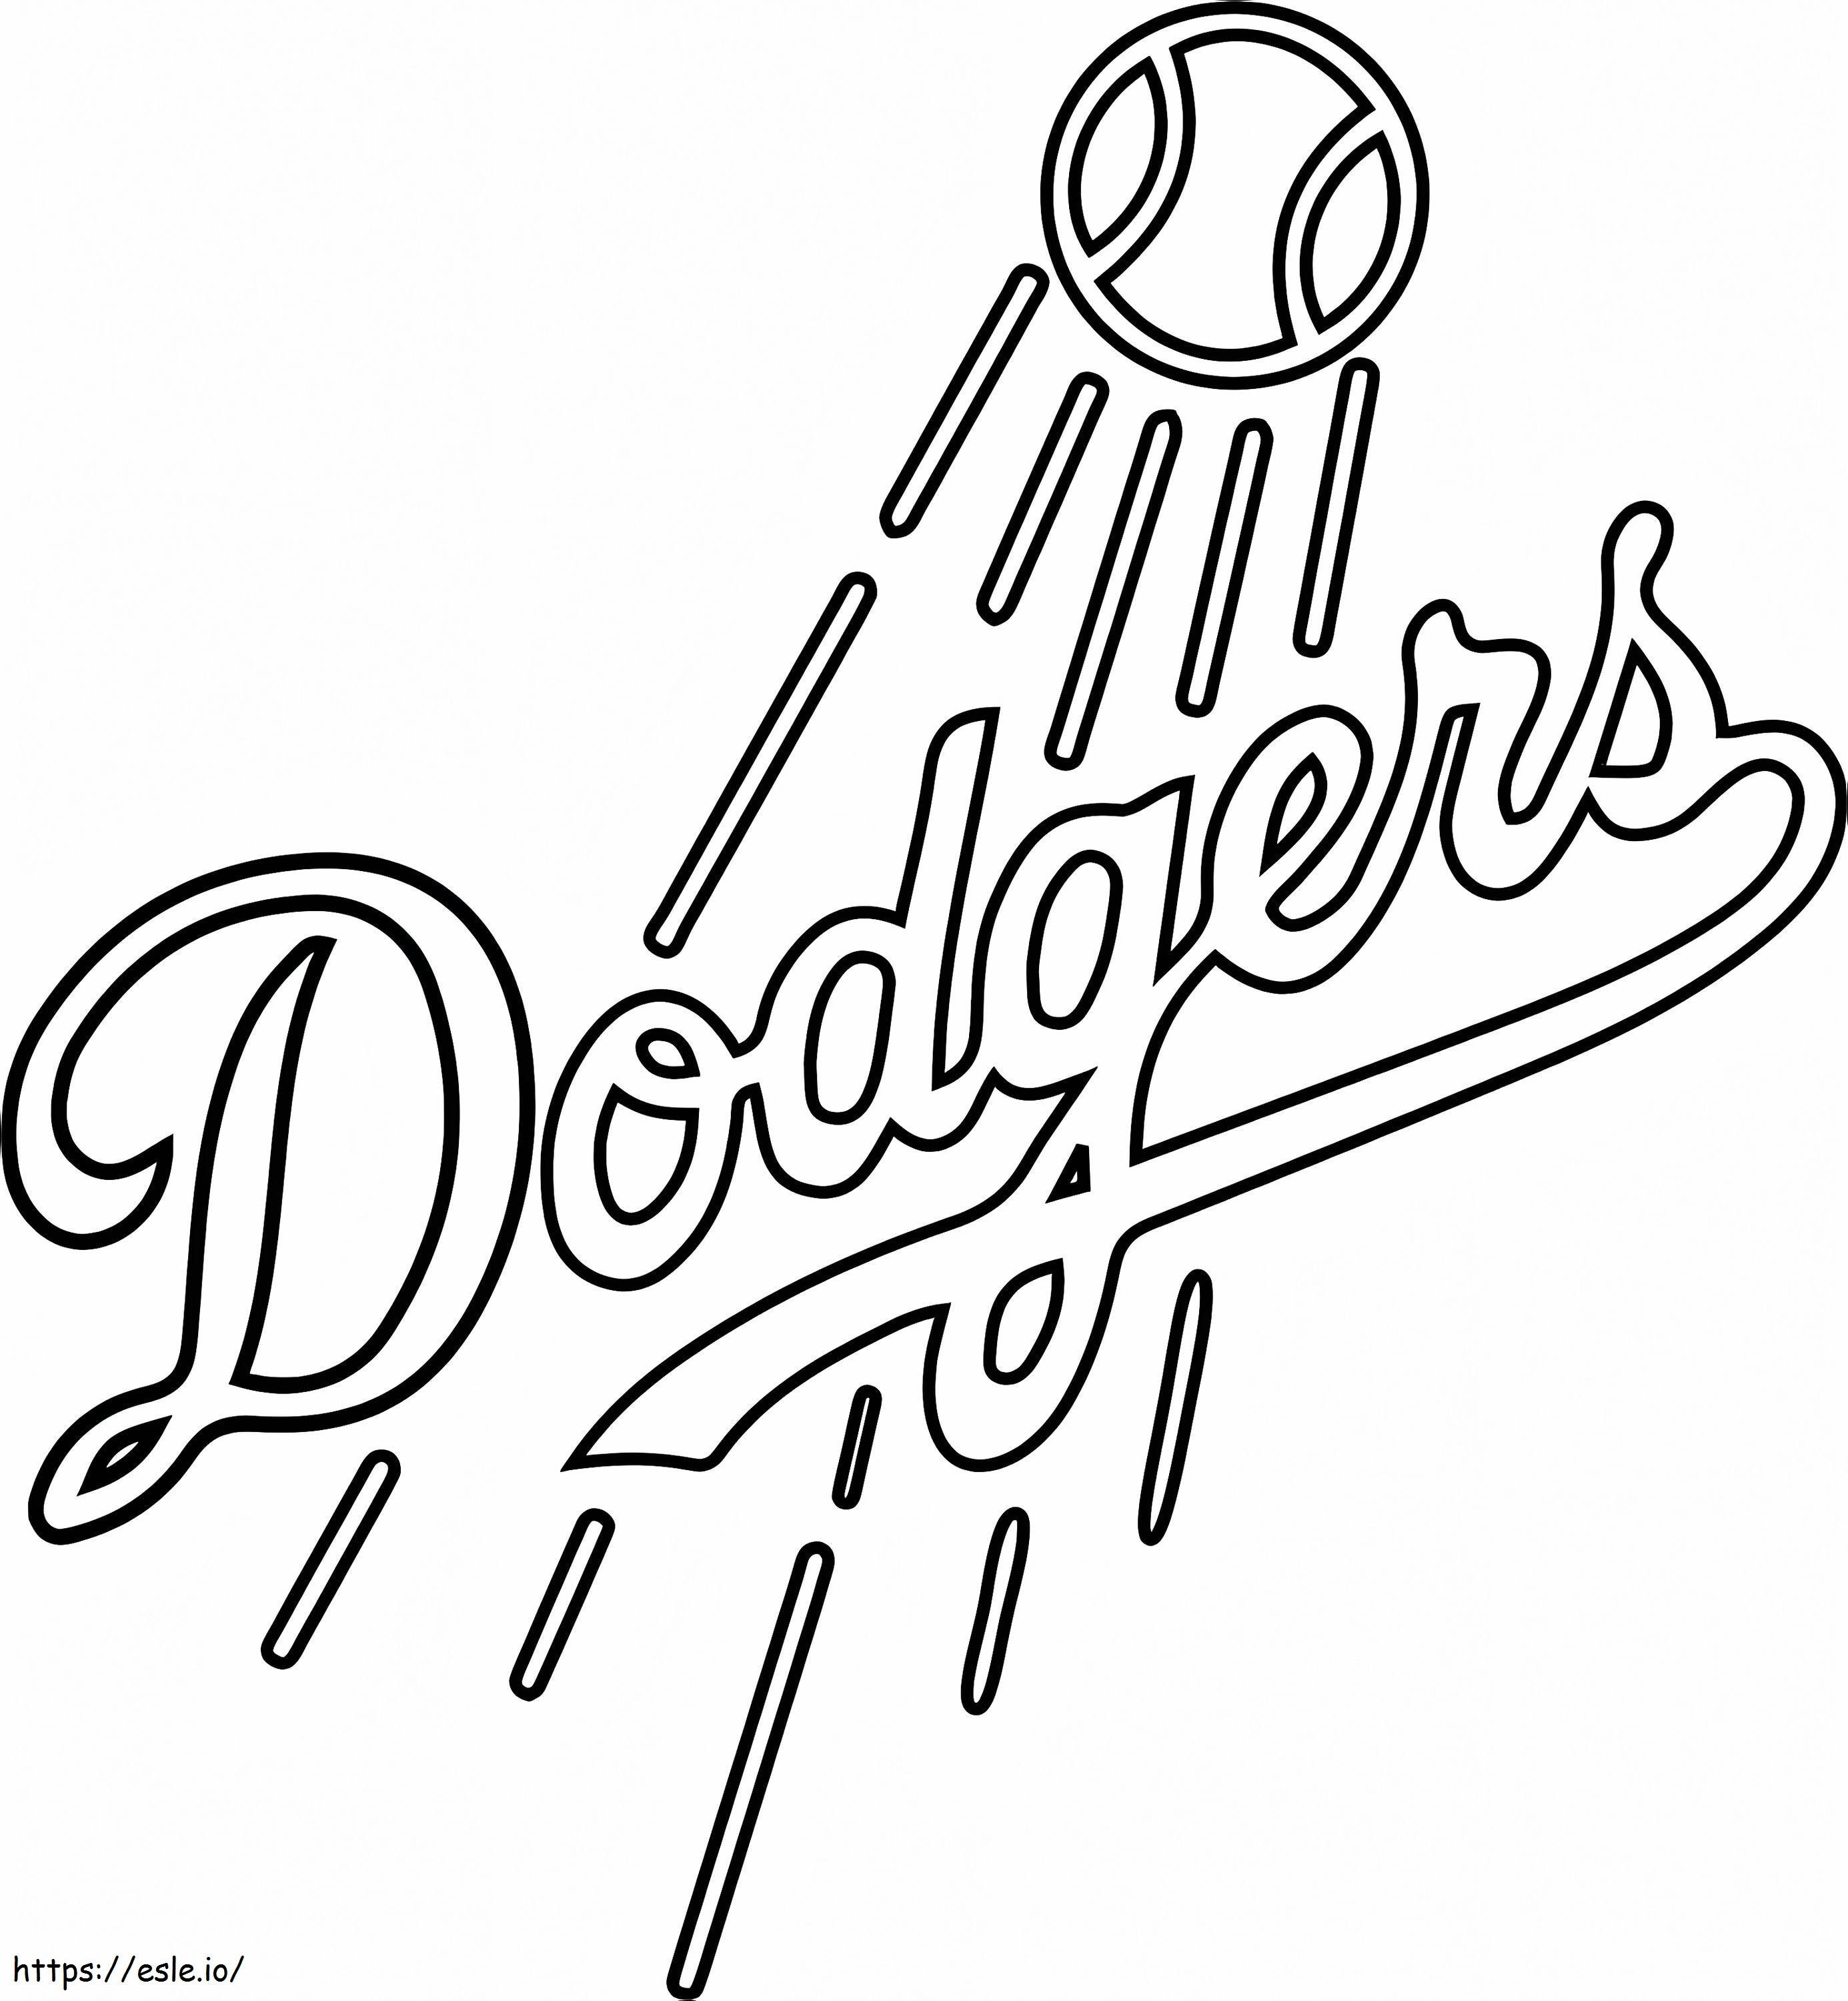 Los Angeles Dodgers Logosu boyama